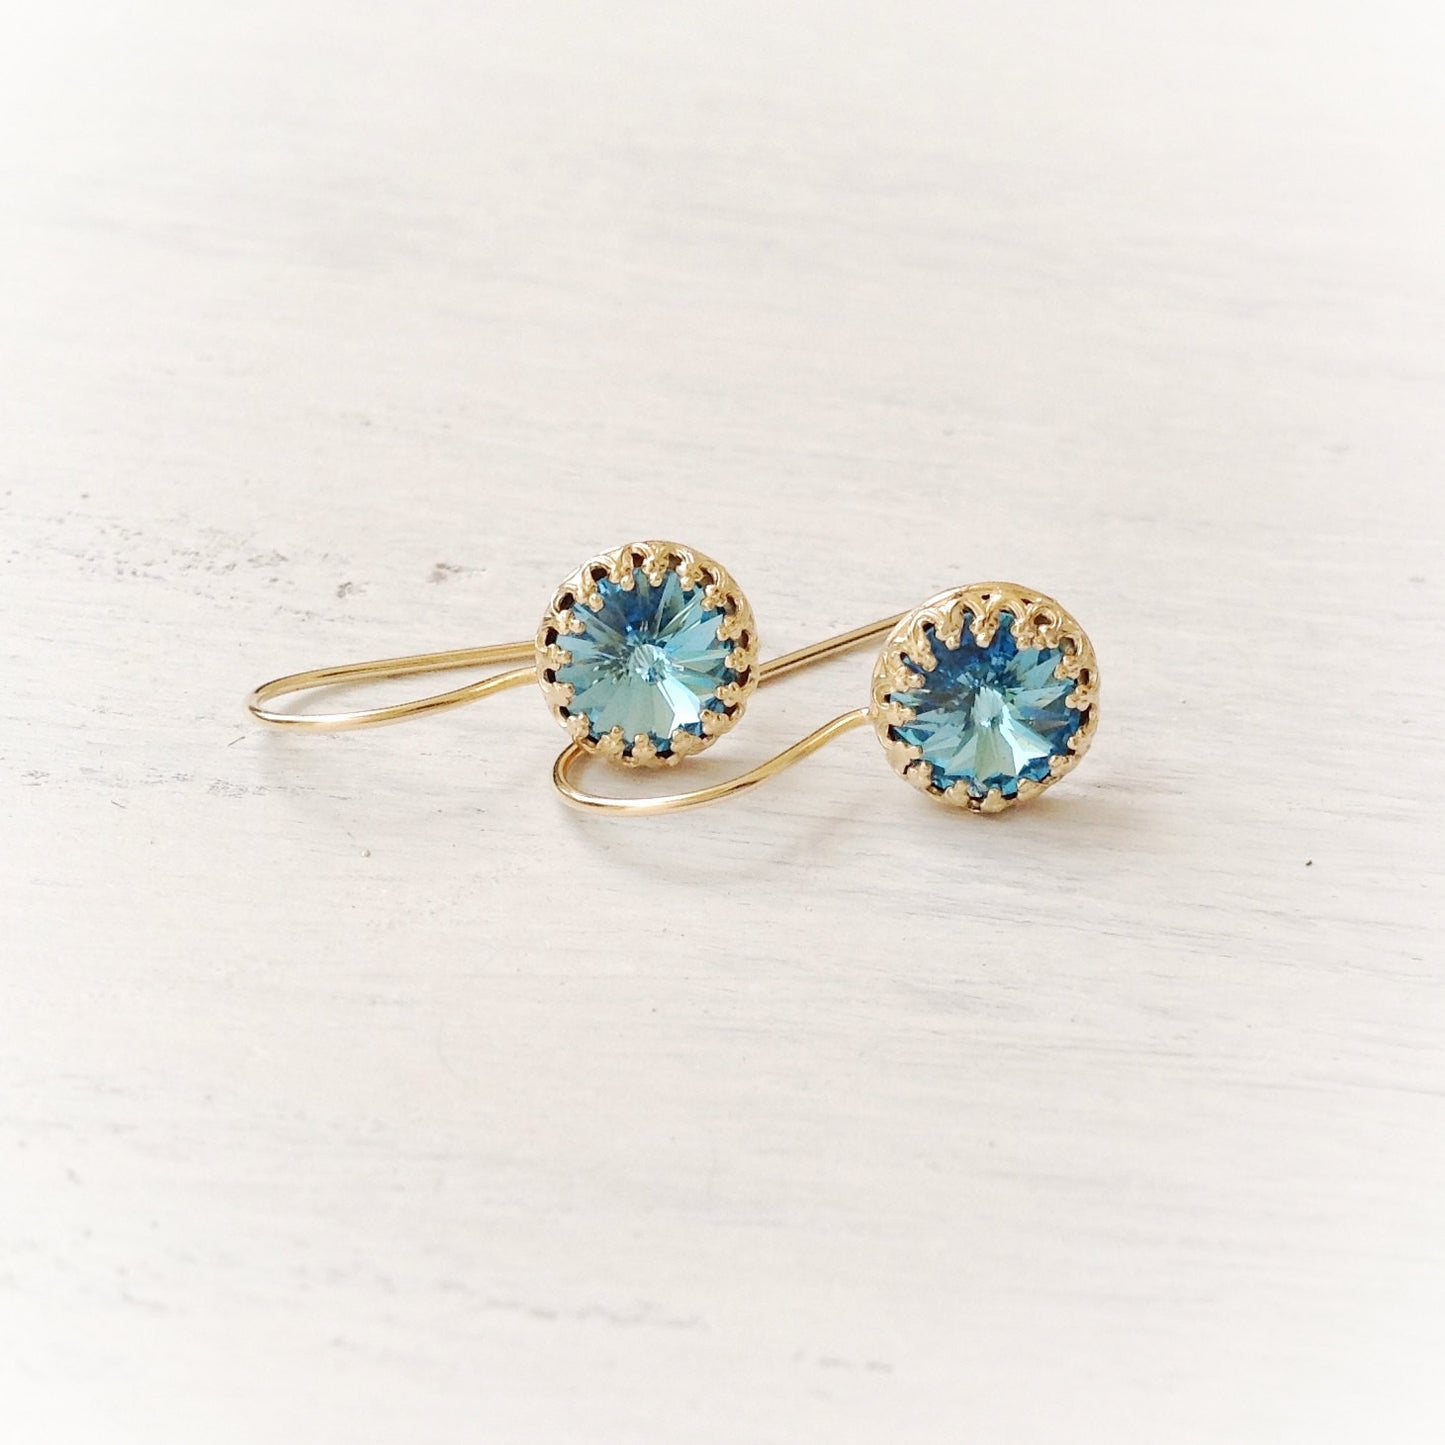 Aquamarine Earrings Blue swarovski crystal 14k gold filled jewelry